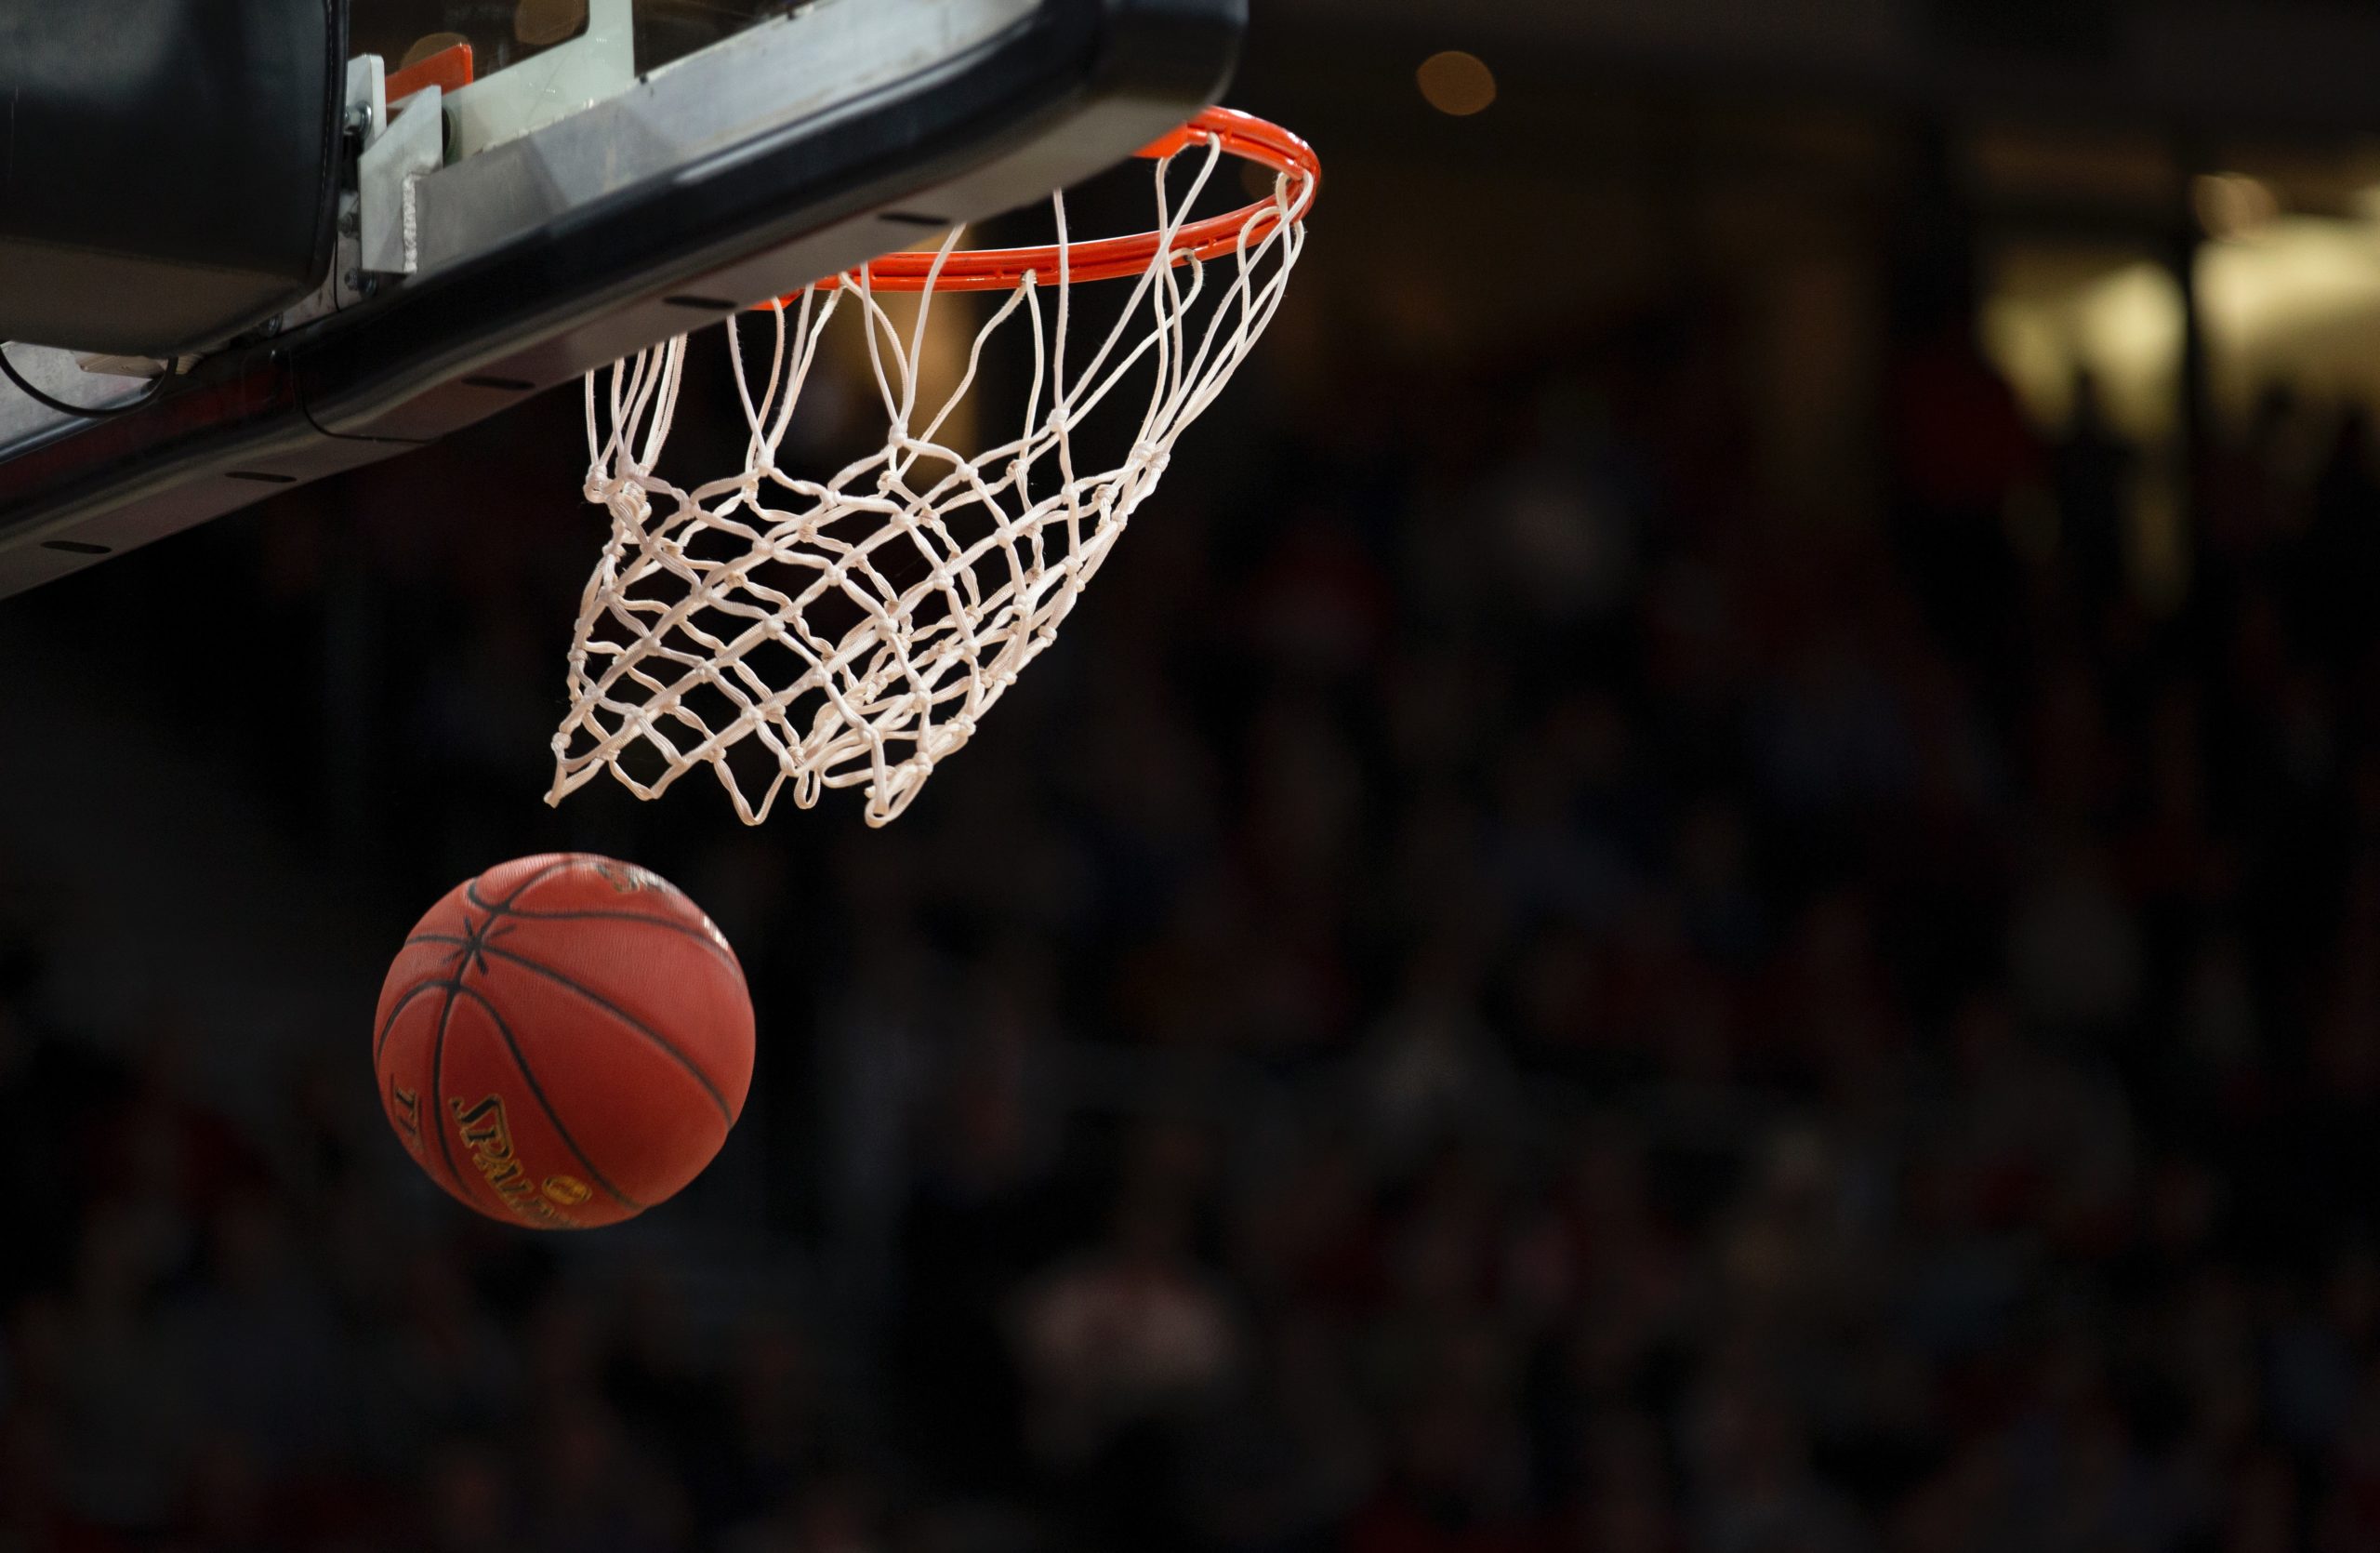 The 5 biggest basketball derbies